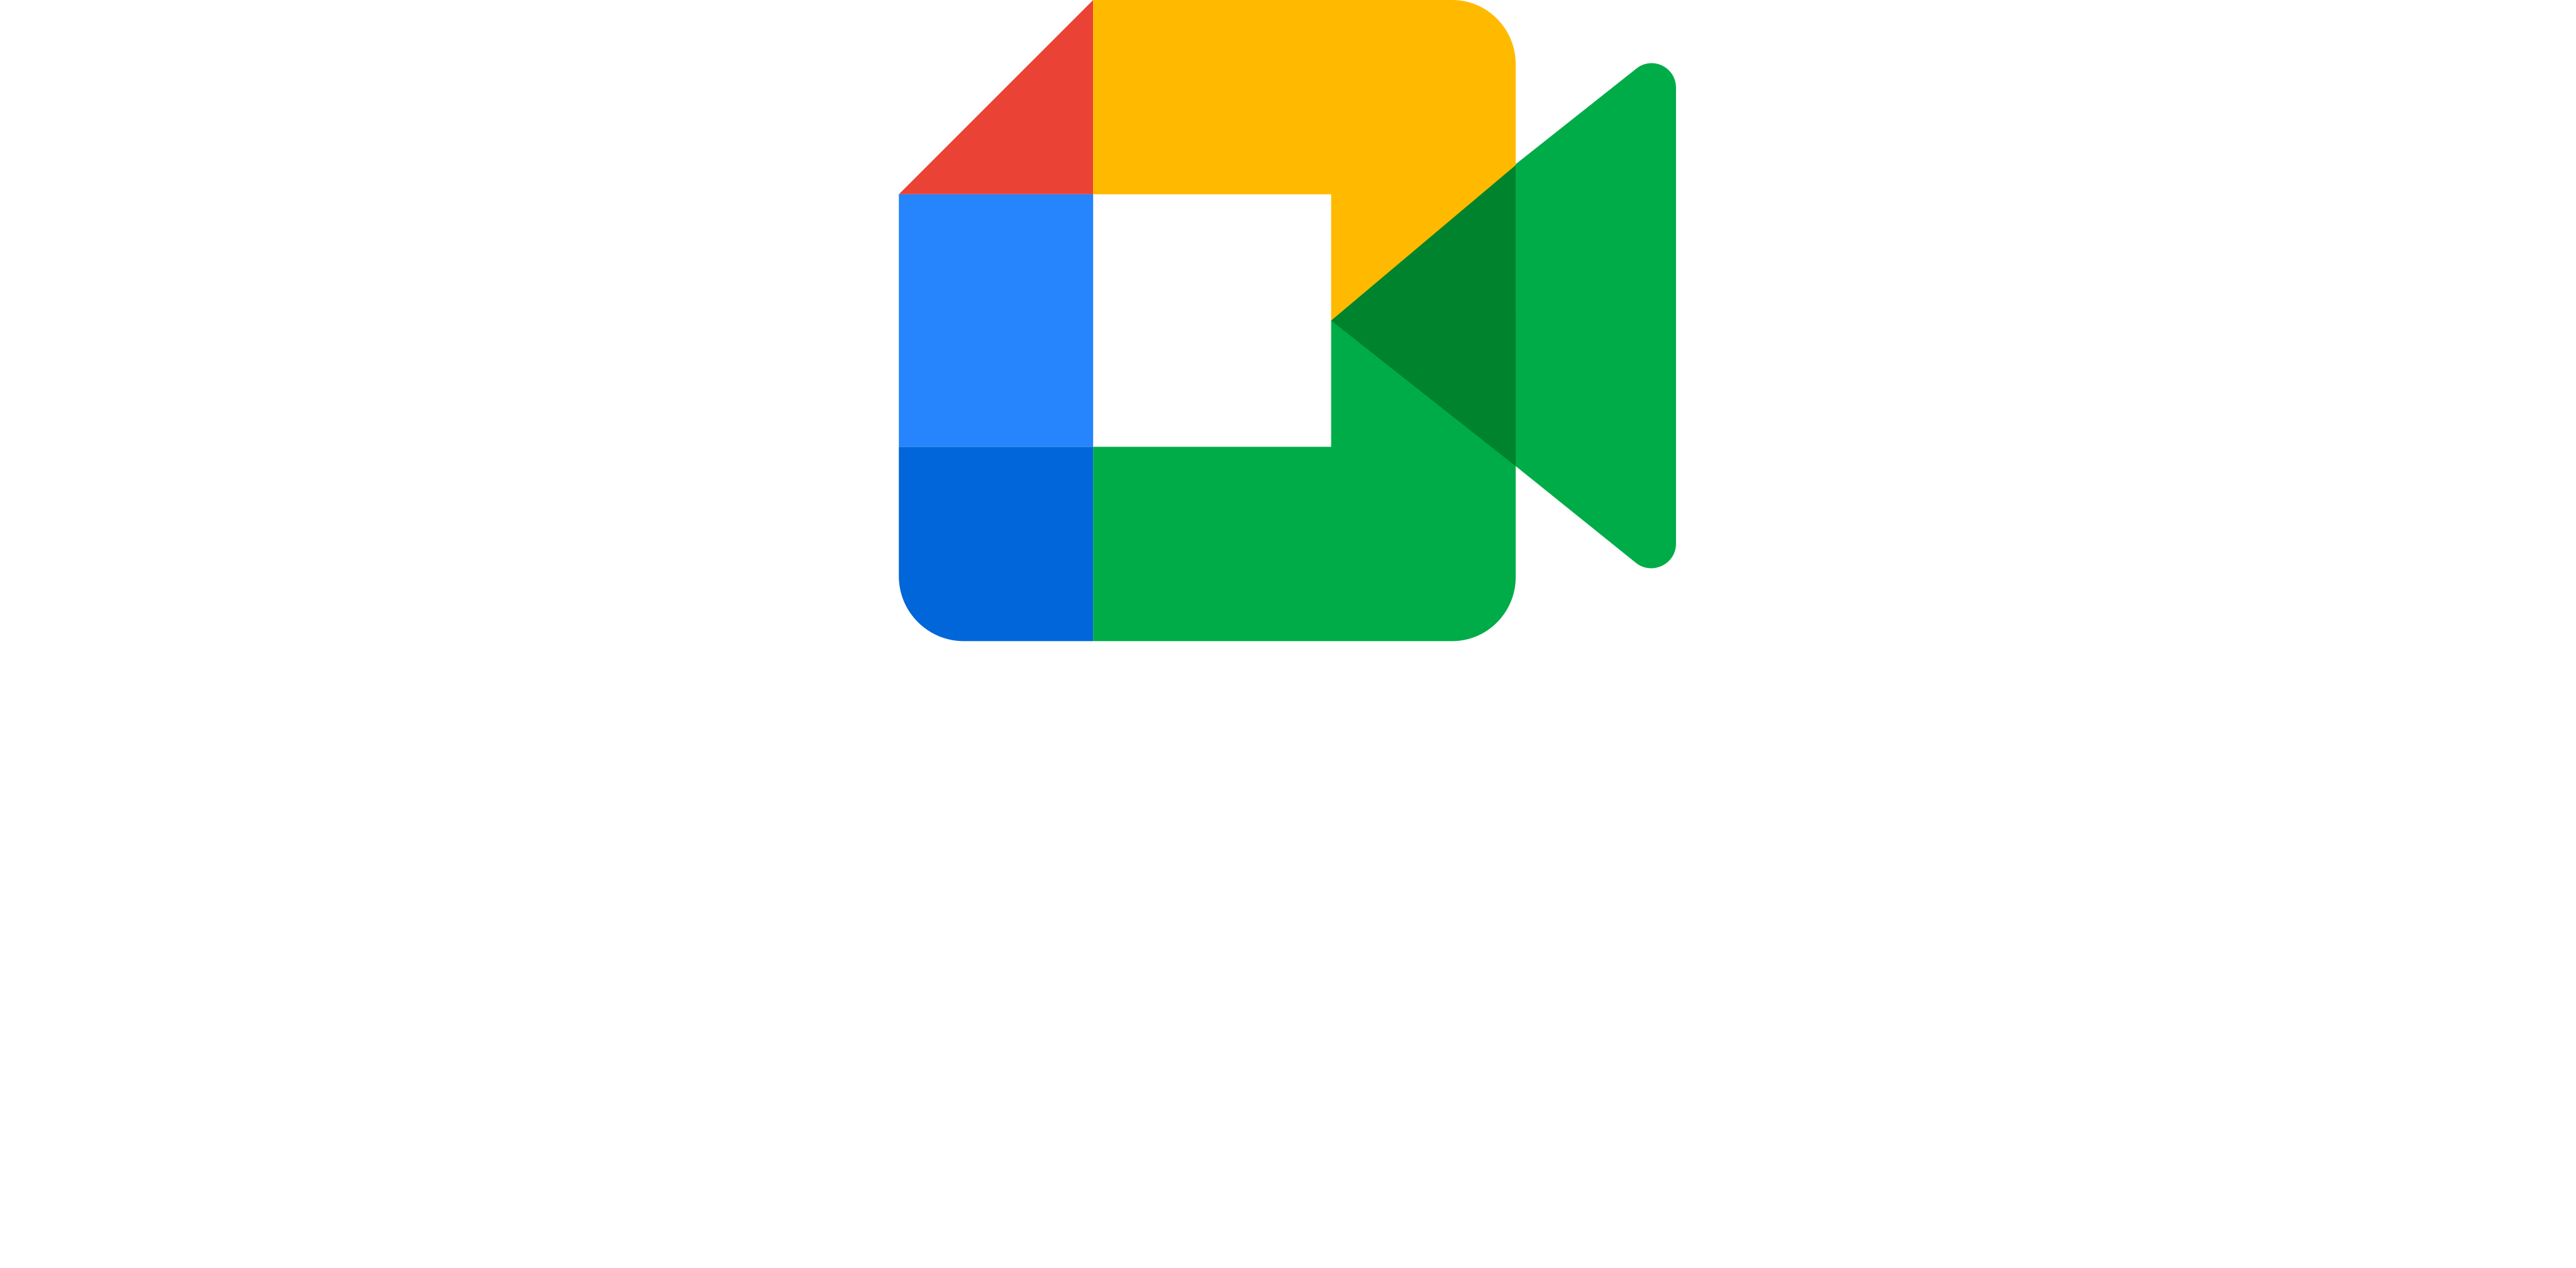 google meet logo 1 copy